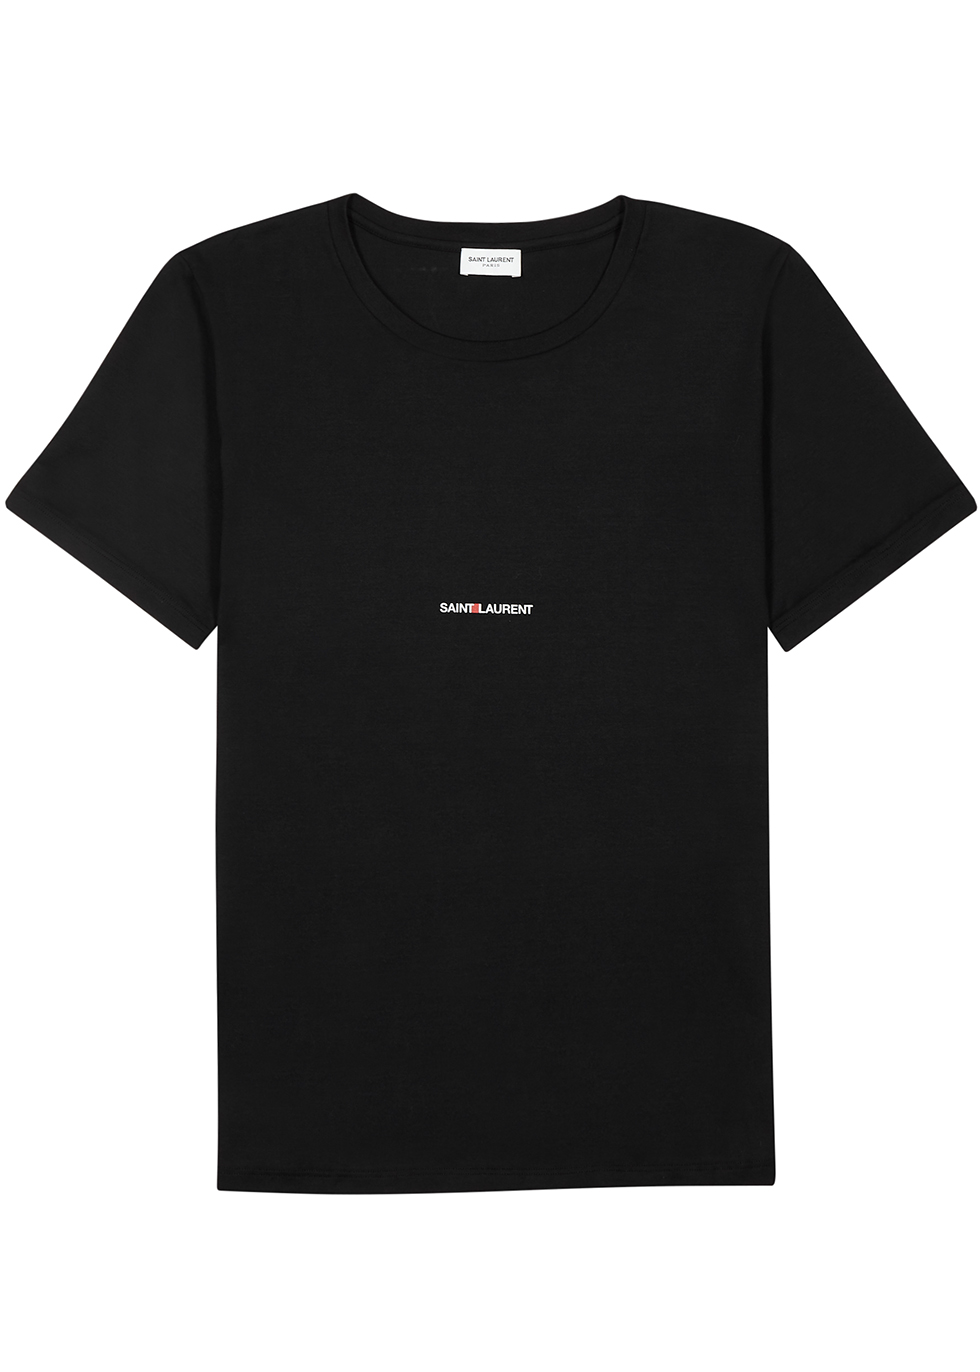 Saint Laurent Basic T Shirt Clearance, 51% OFF | espirituviajero.com